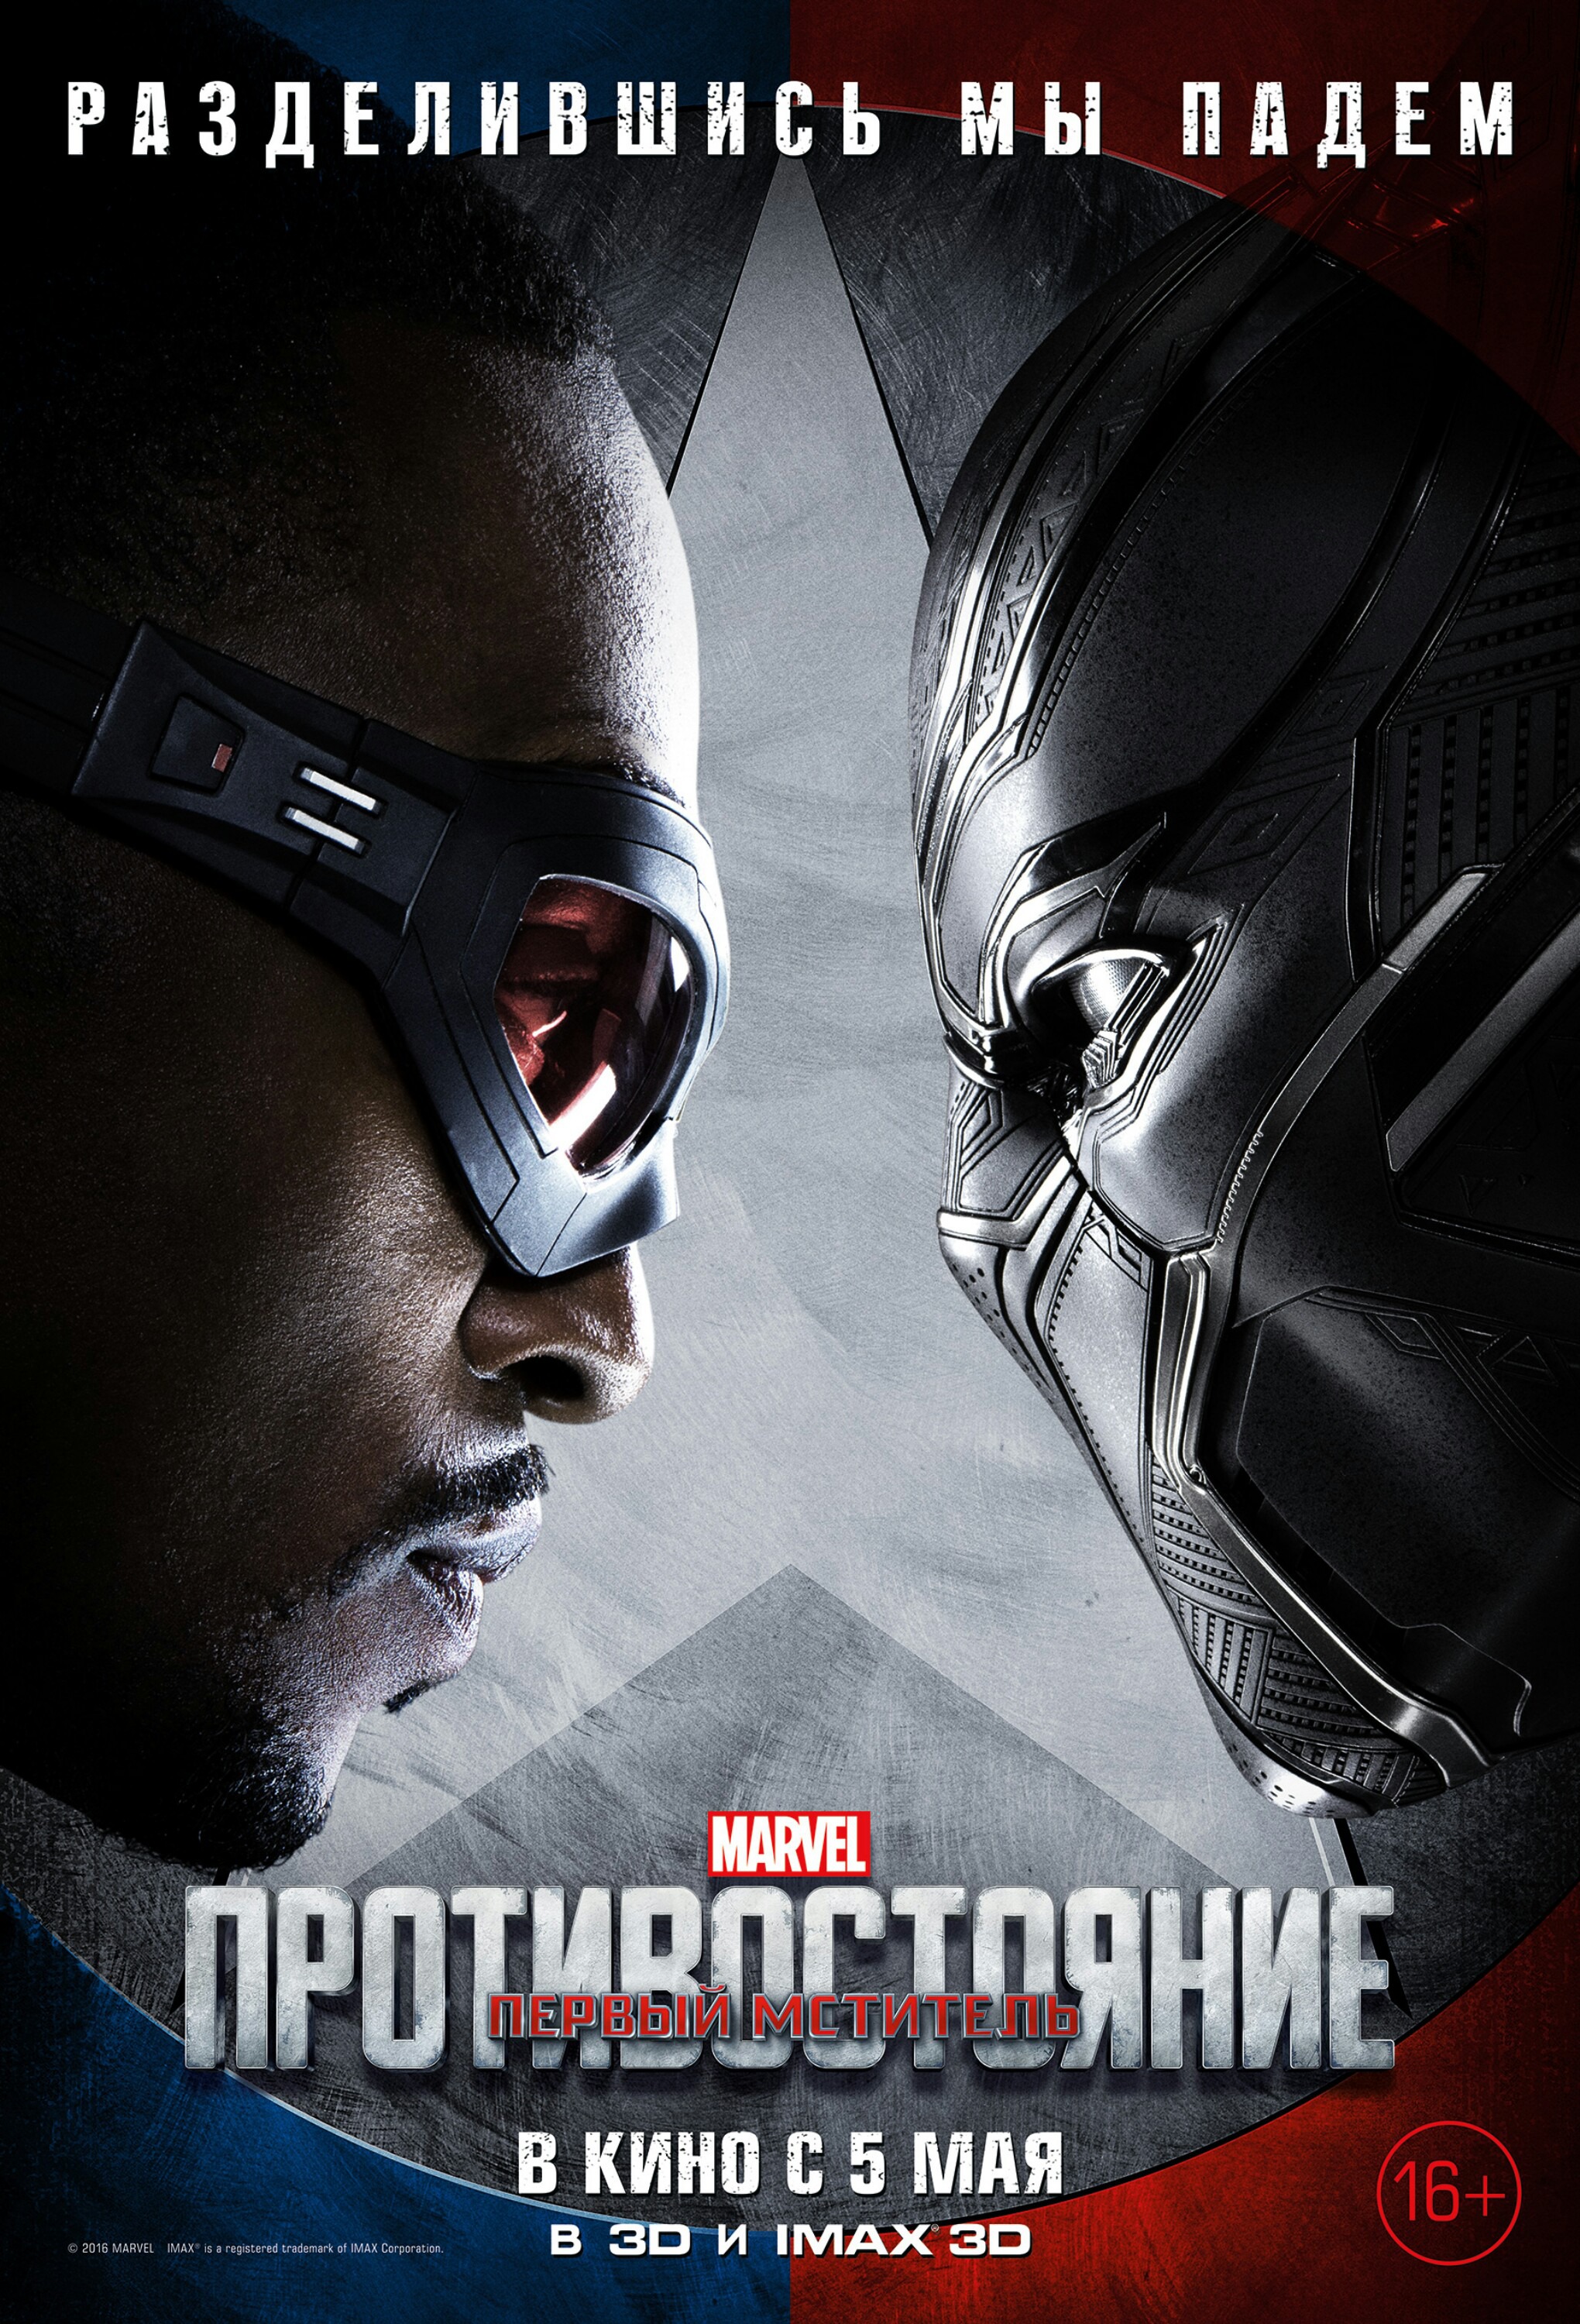 Mega Sized Movie Poster Image for Captain America: Civil War (#29 of 42)